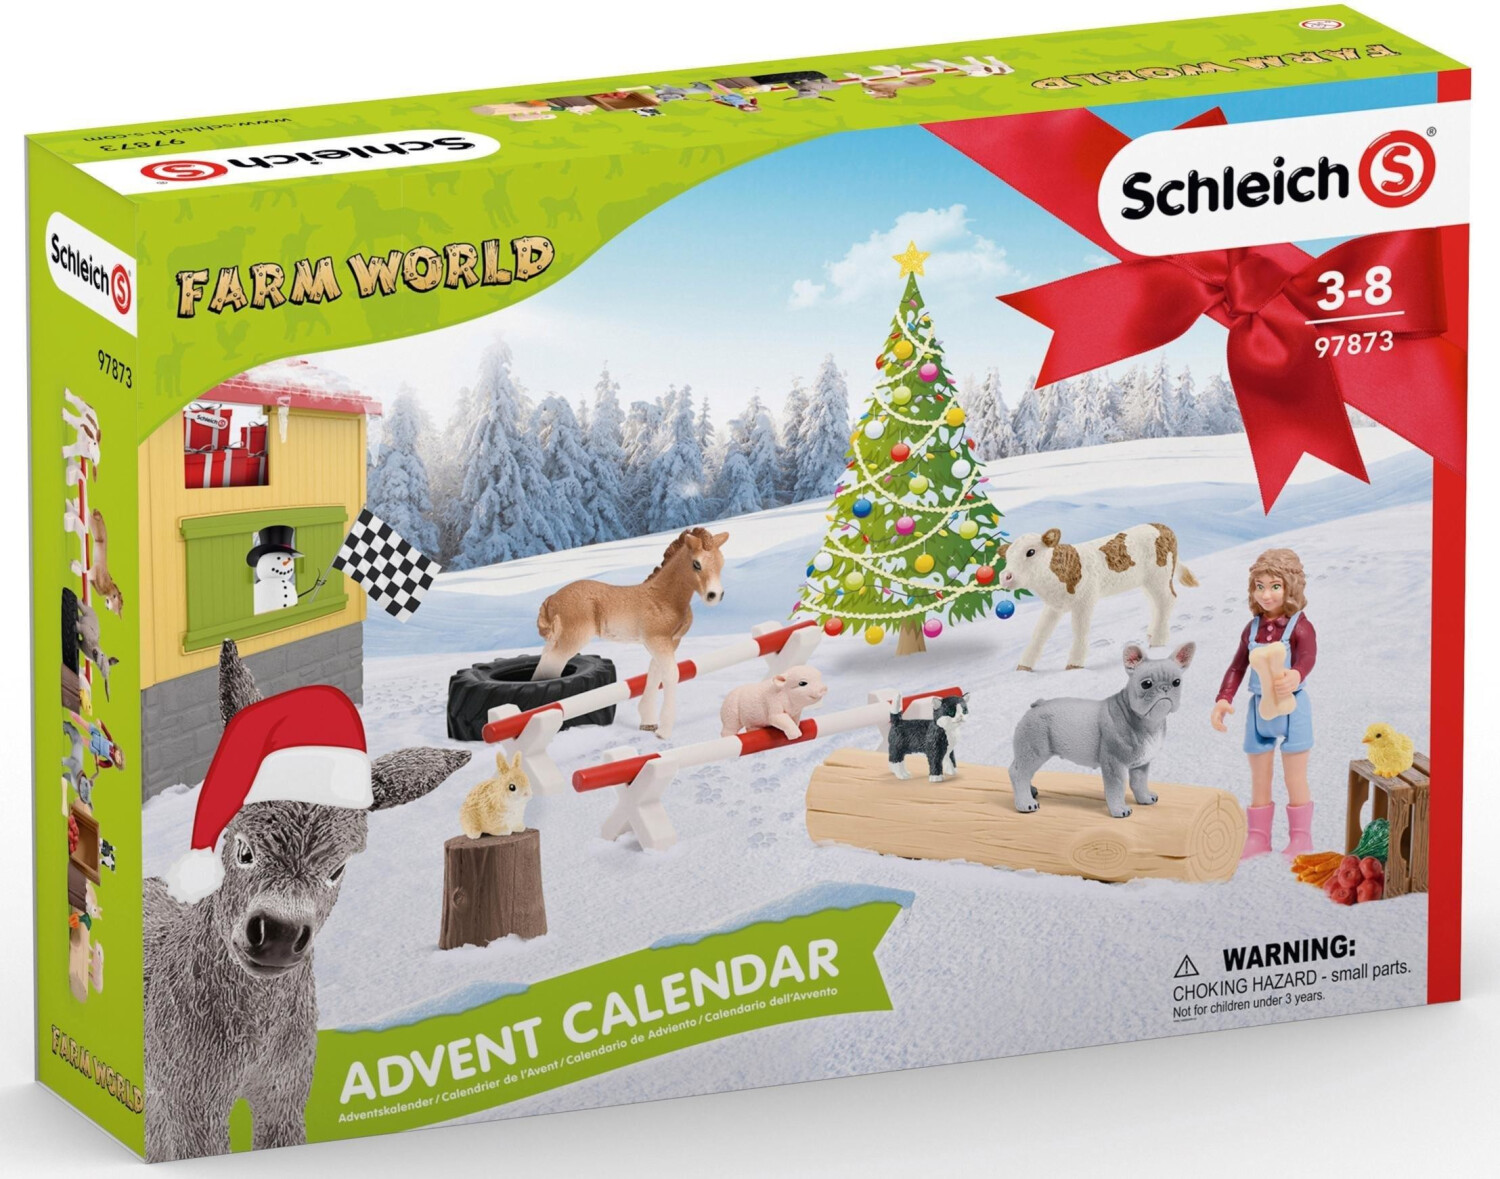 Buy Schleich Advent Calendar Farm World from £26.99 (Today) – Best